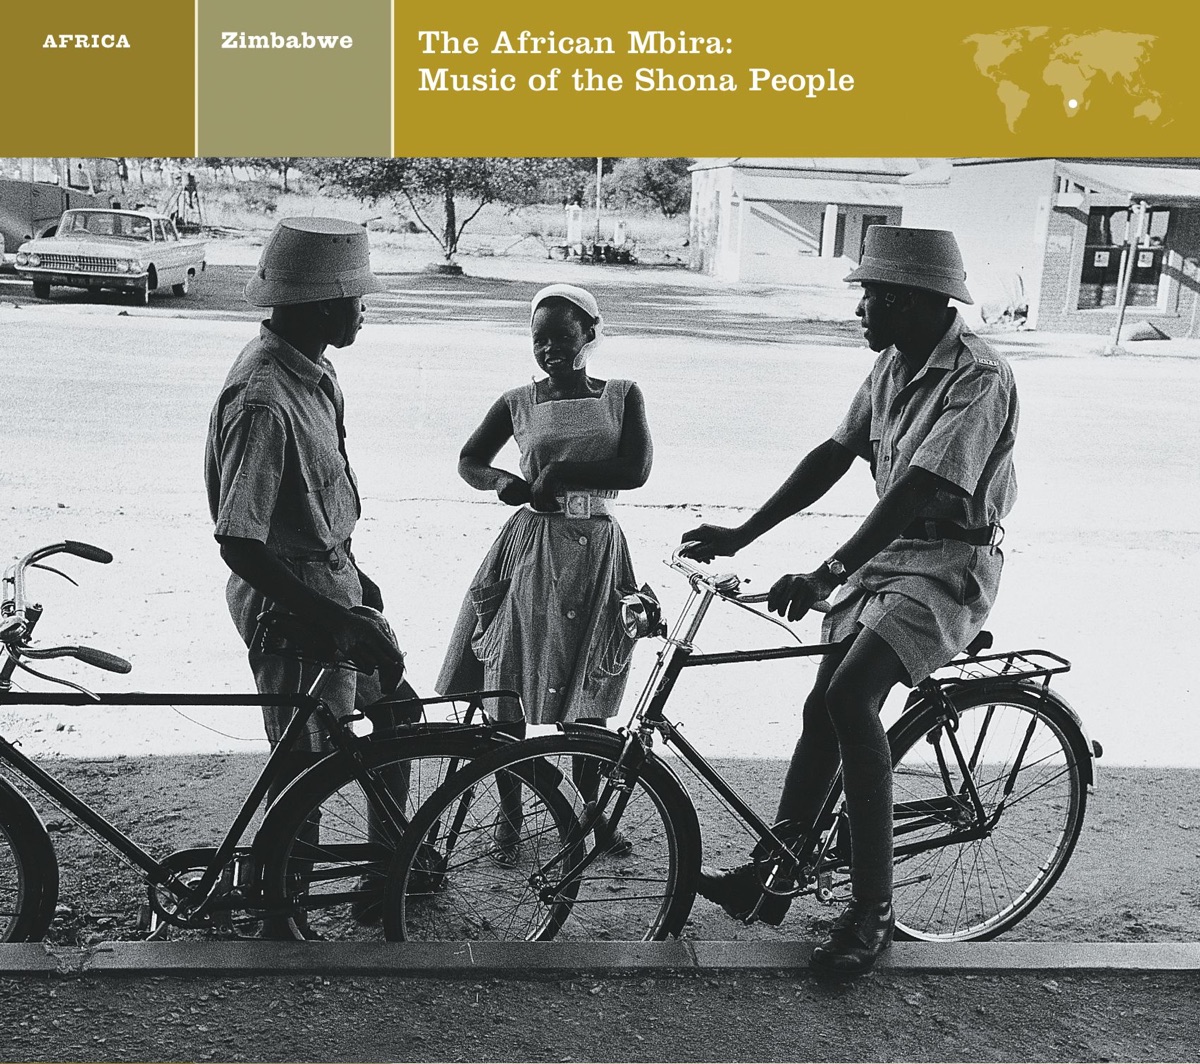 ZIMBABWE The African Mbira: Music of the Shona People - Album by